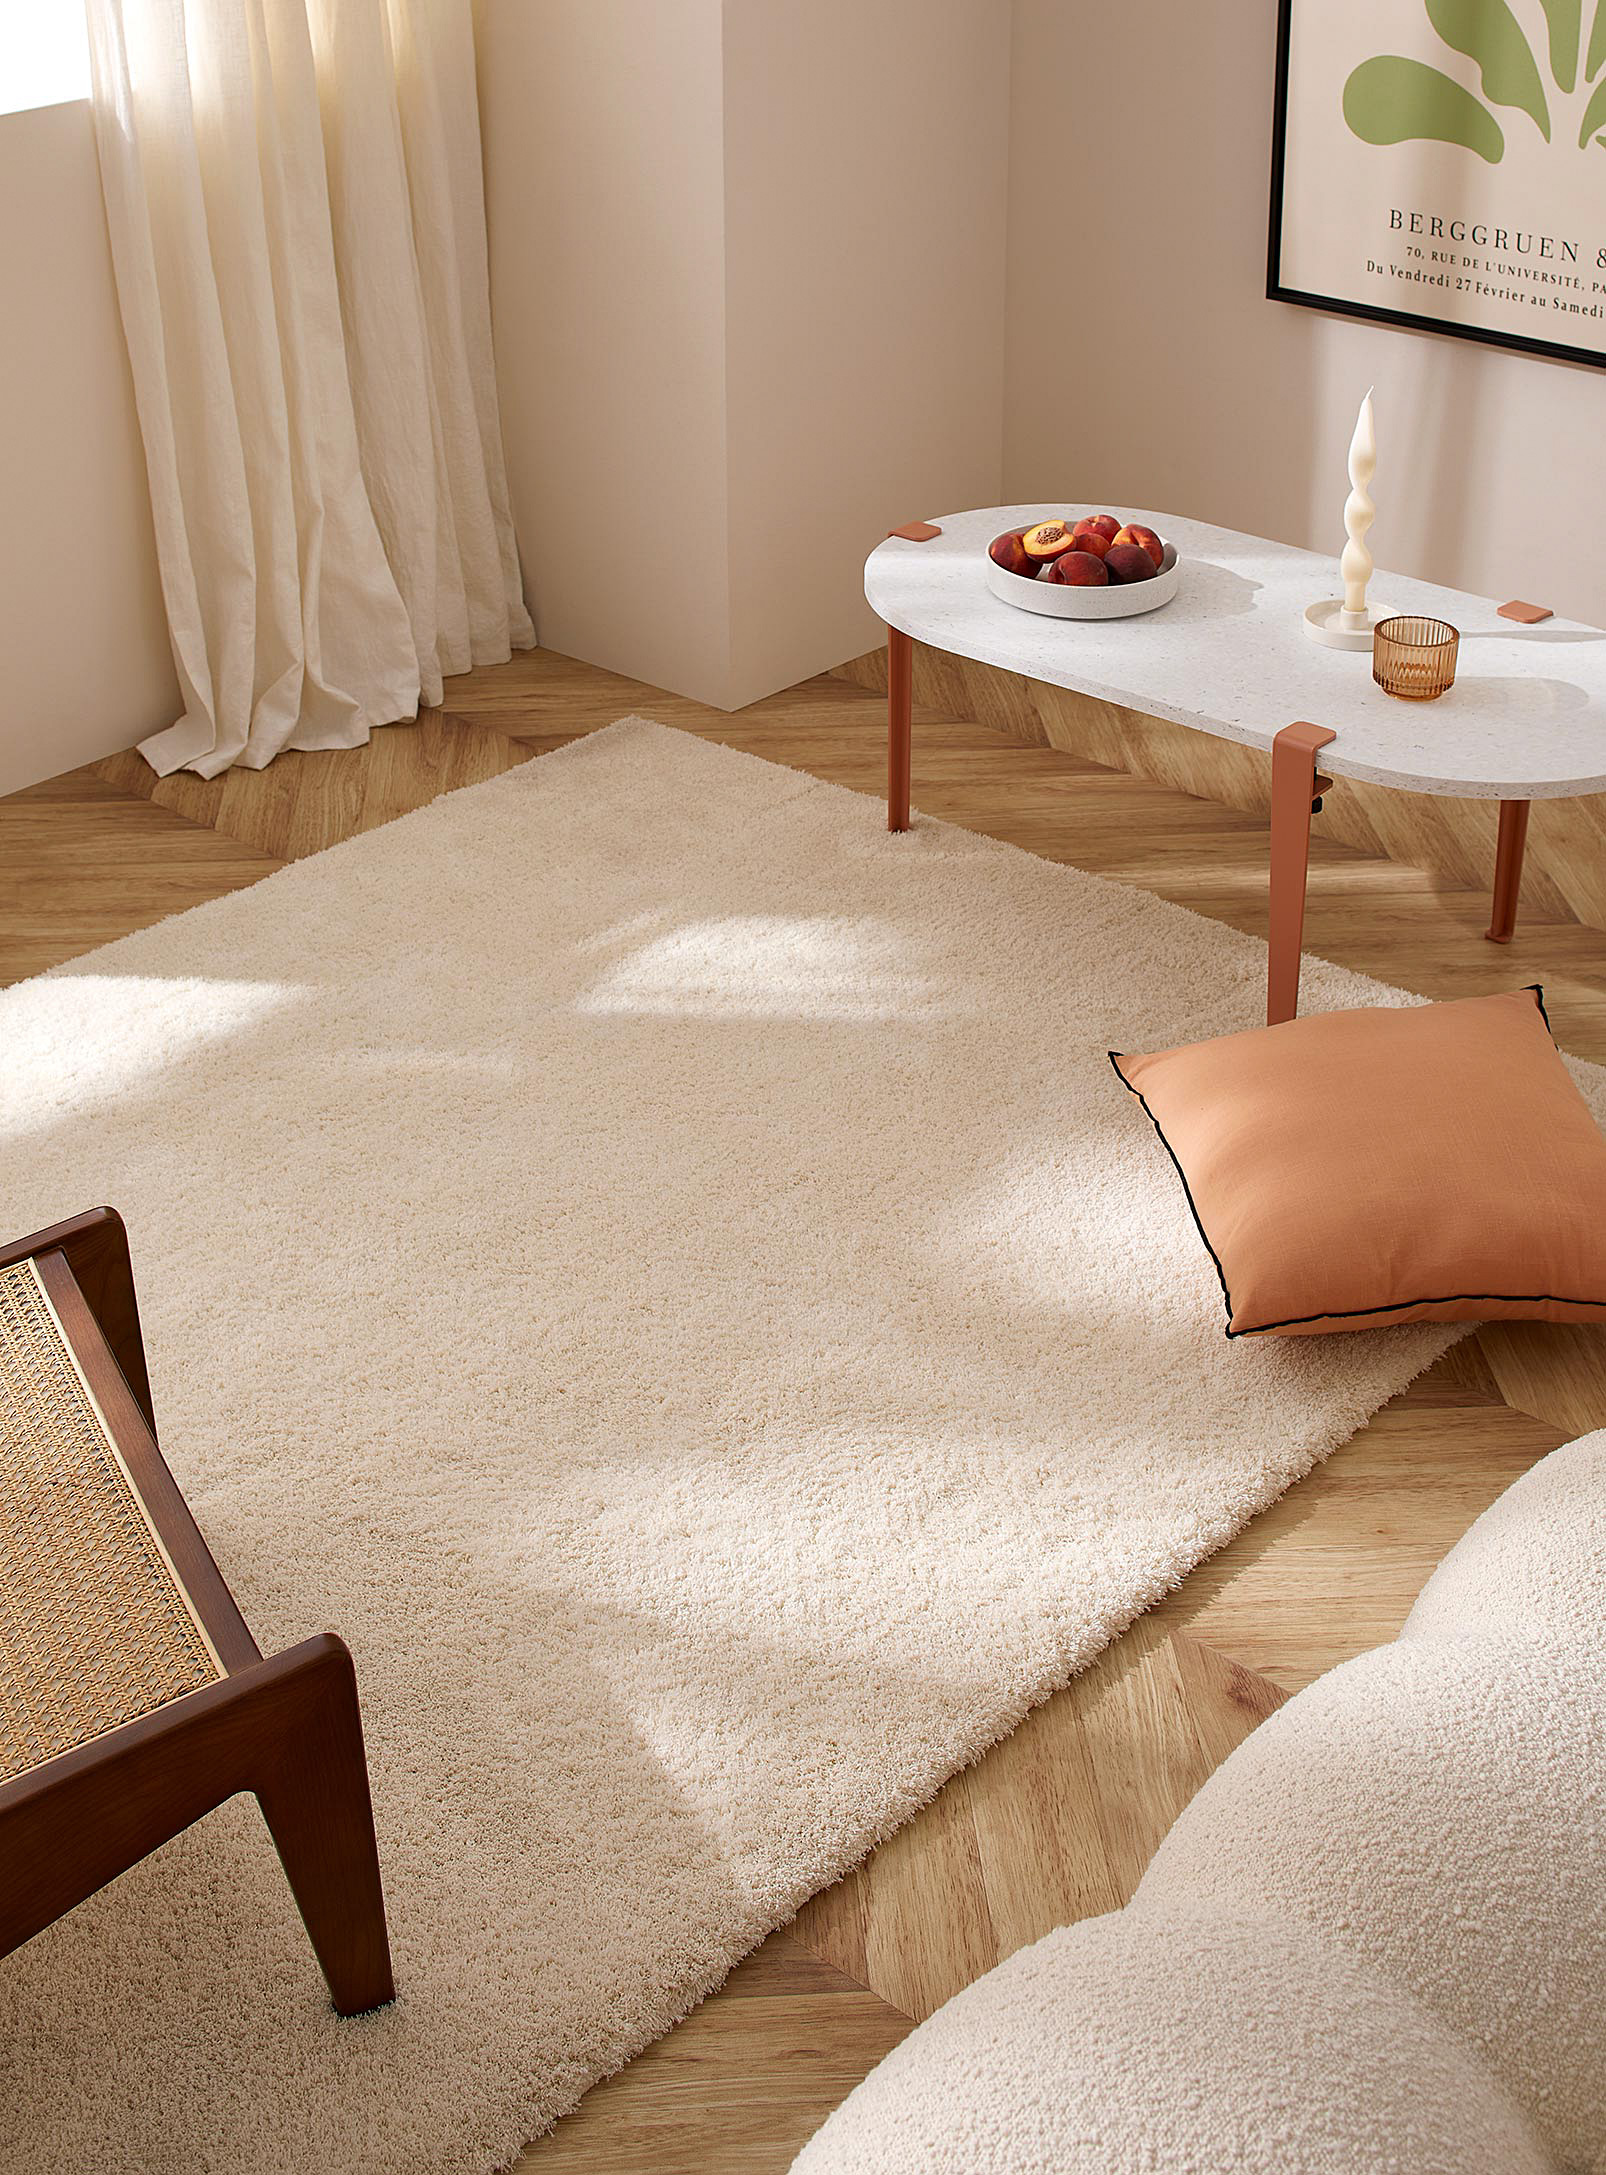 Simons Maison - Solid cream shag rug See available sizes